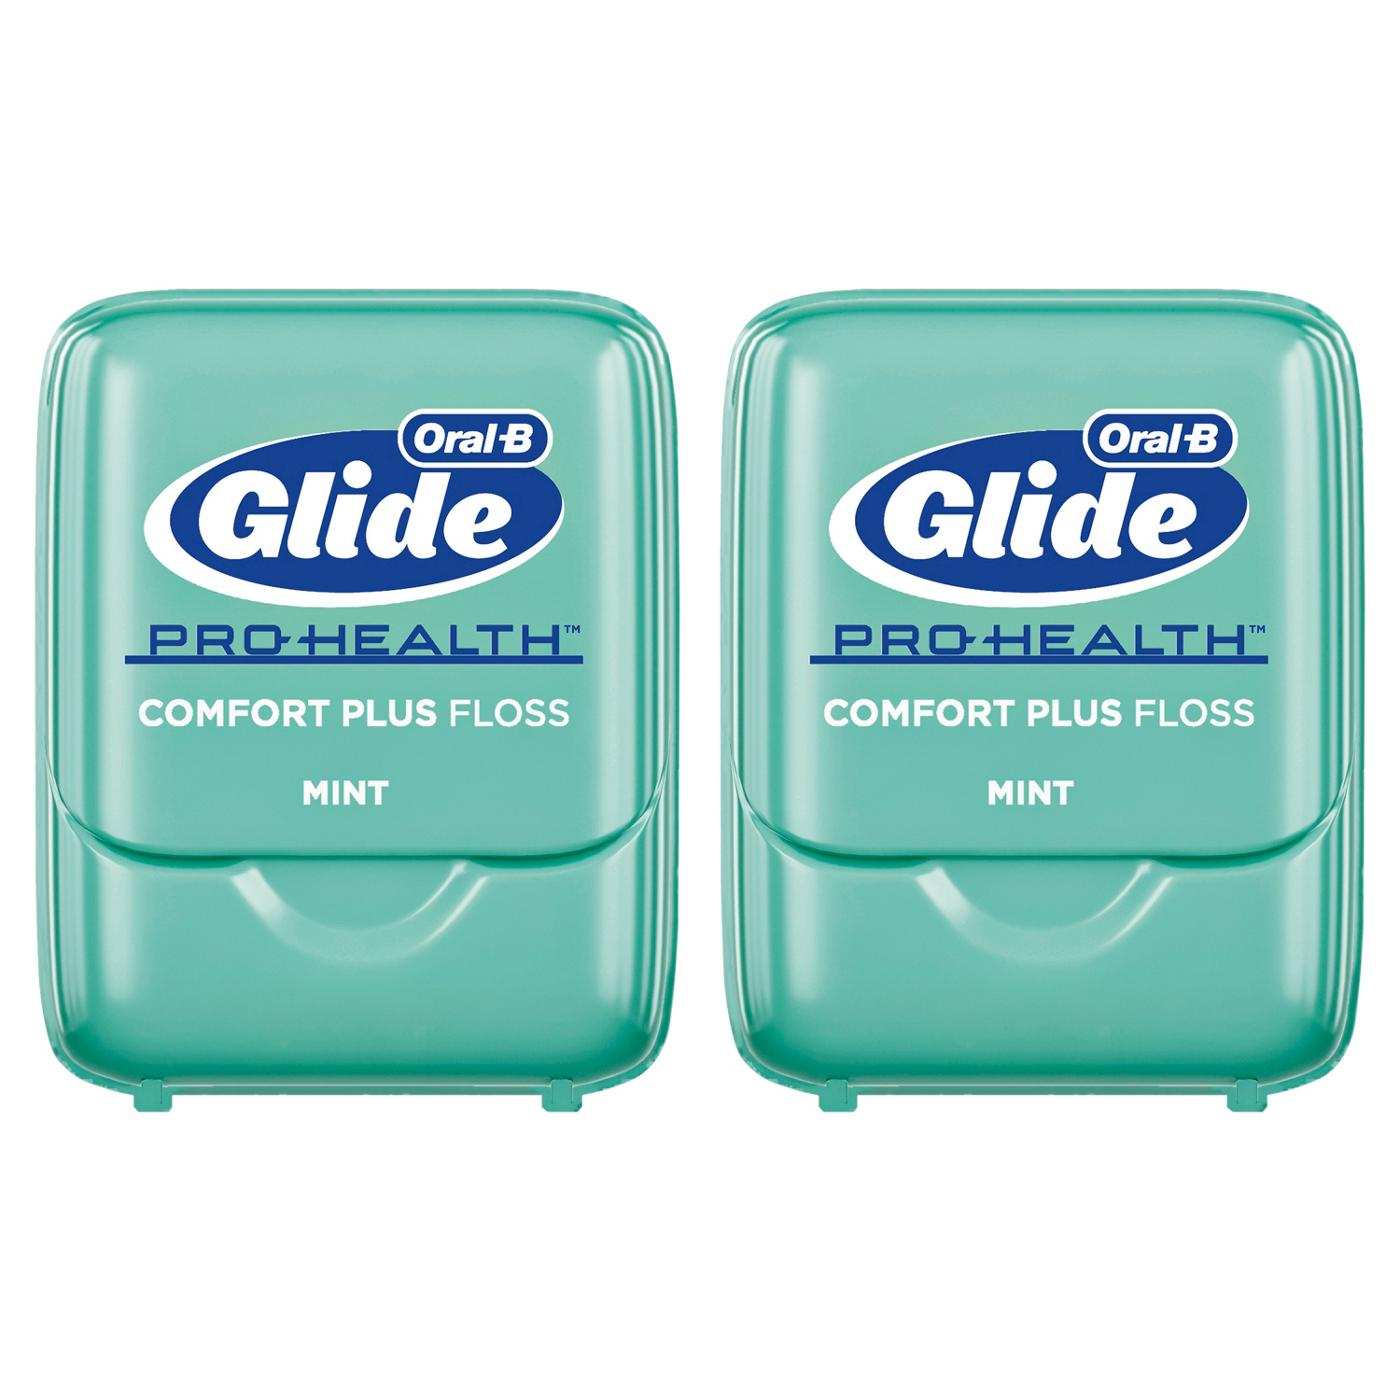 Oral-B Glide Pro-Health Comfort Plus Dental Floss - Mint; image 6 of 10